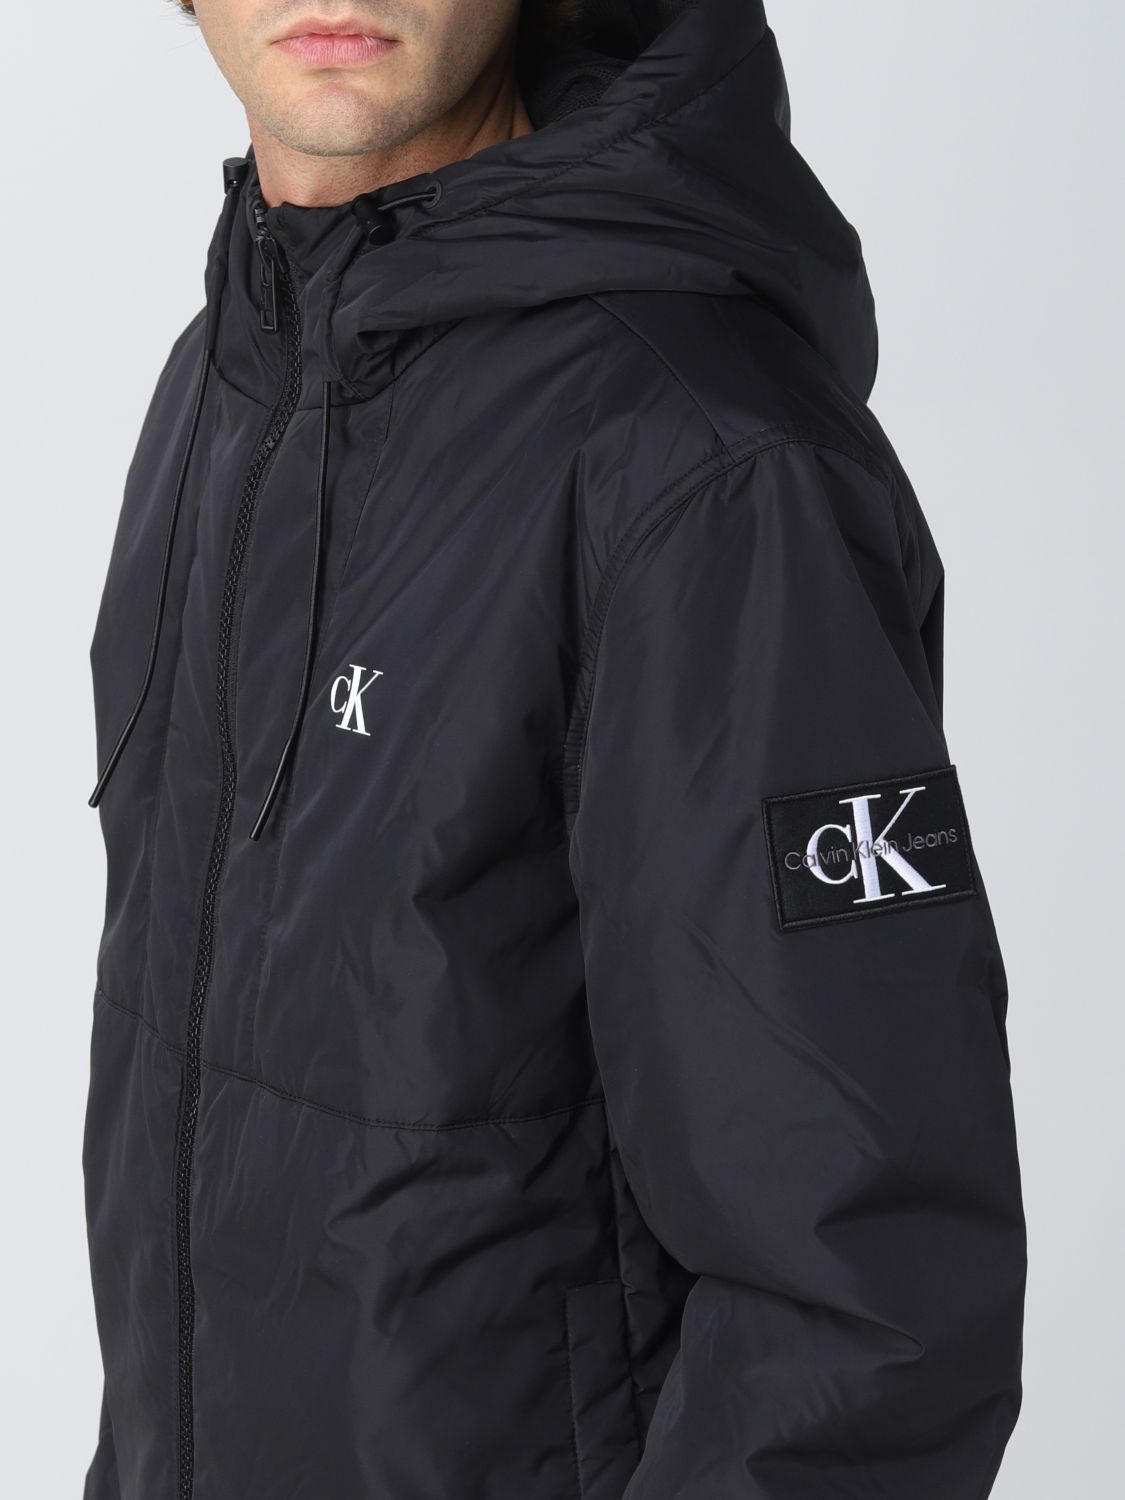 CALVIN KLEIN JEANS: Jacket men - Black | Jacket Calvin Klein Jeans ...